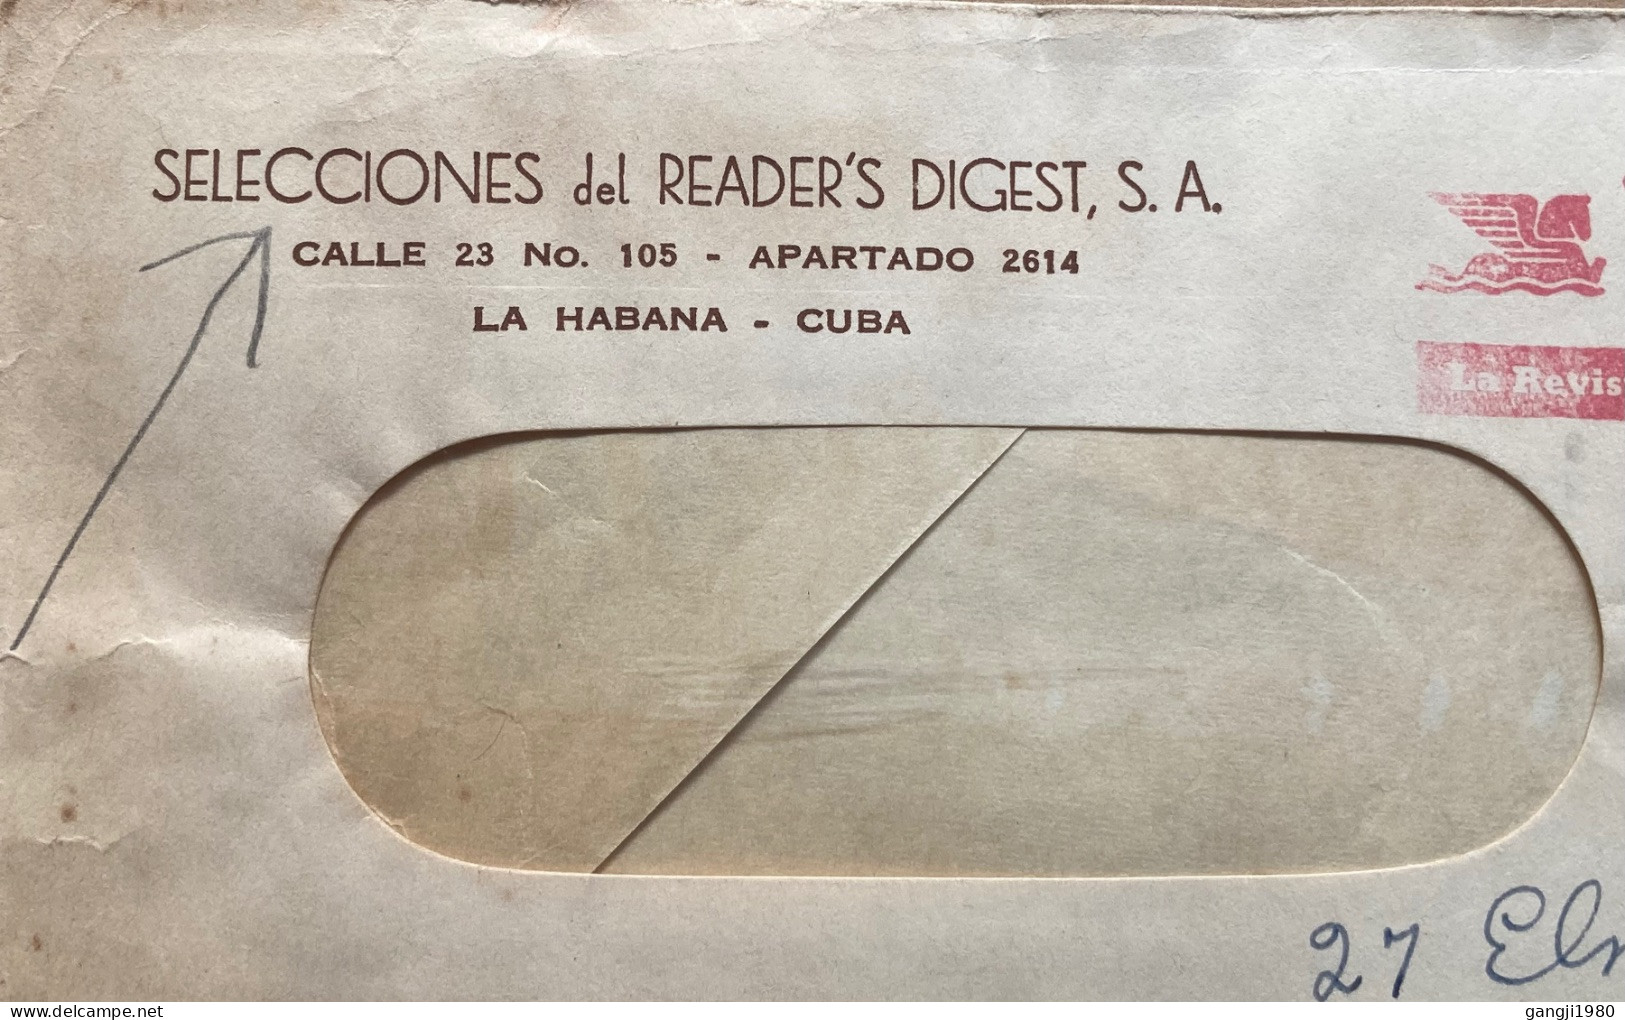 CUBA -GUAM 1949, COVER USED TO  USA VIA GUAM, FORWARED, JOURNAL READER DIGEST, METER MACHINE, BUY CUBAN SUGAR, HAVANA CI